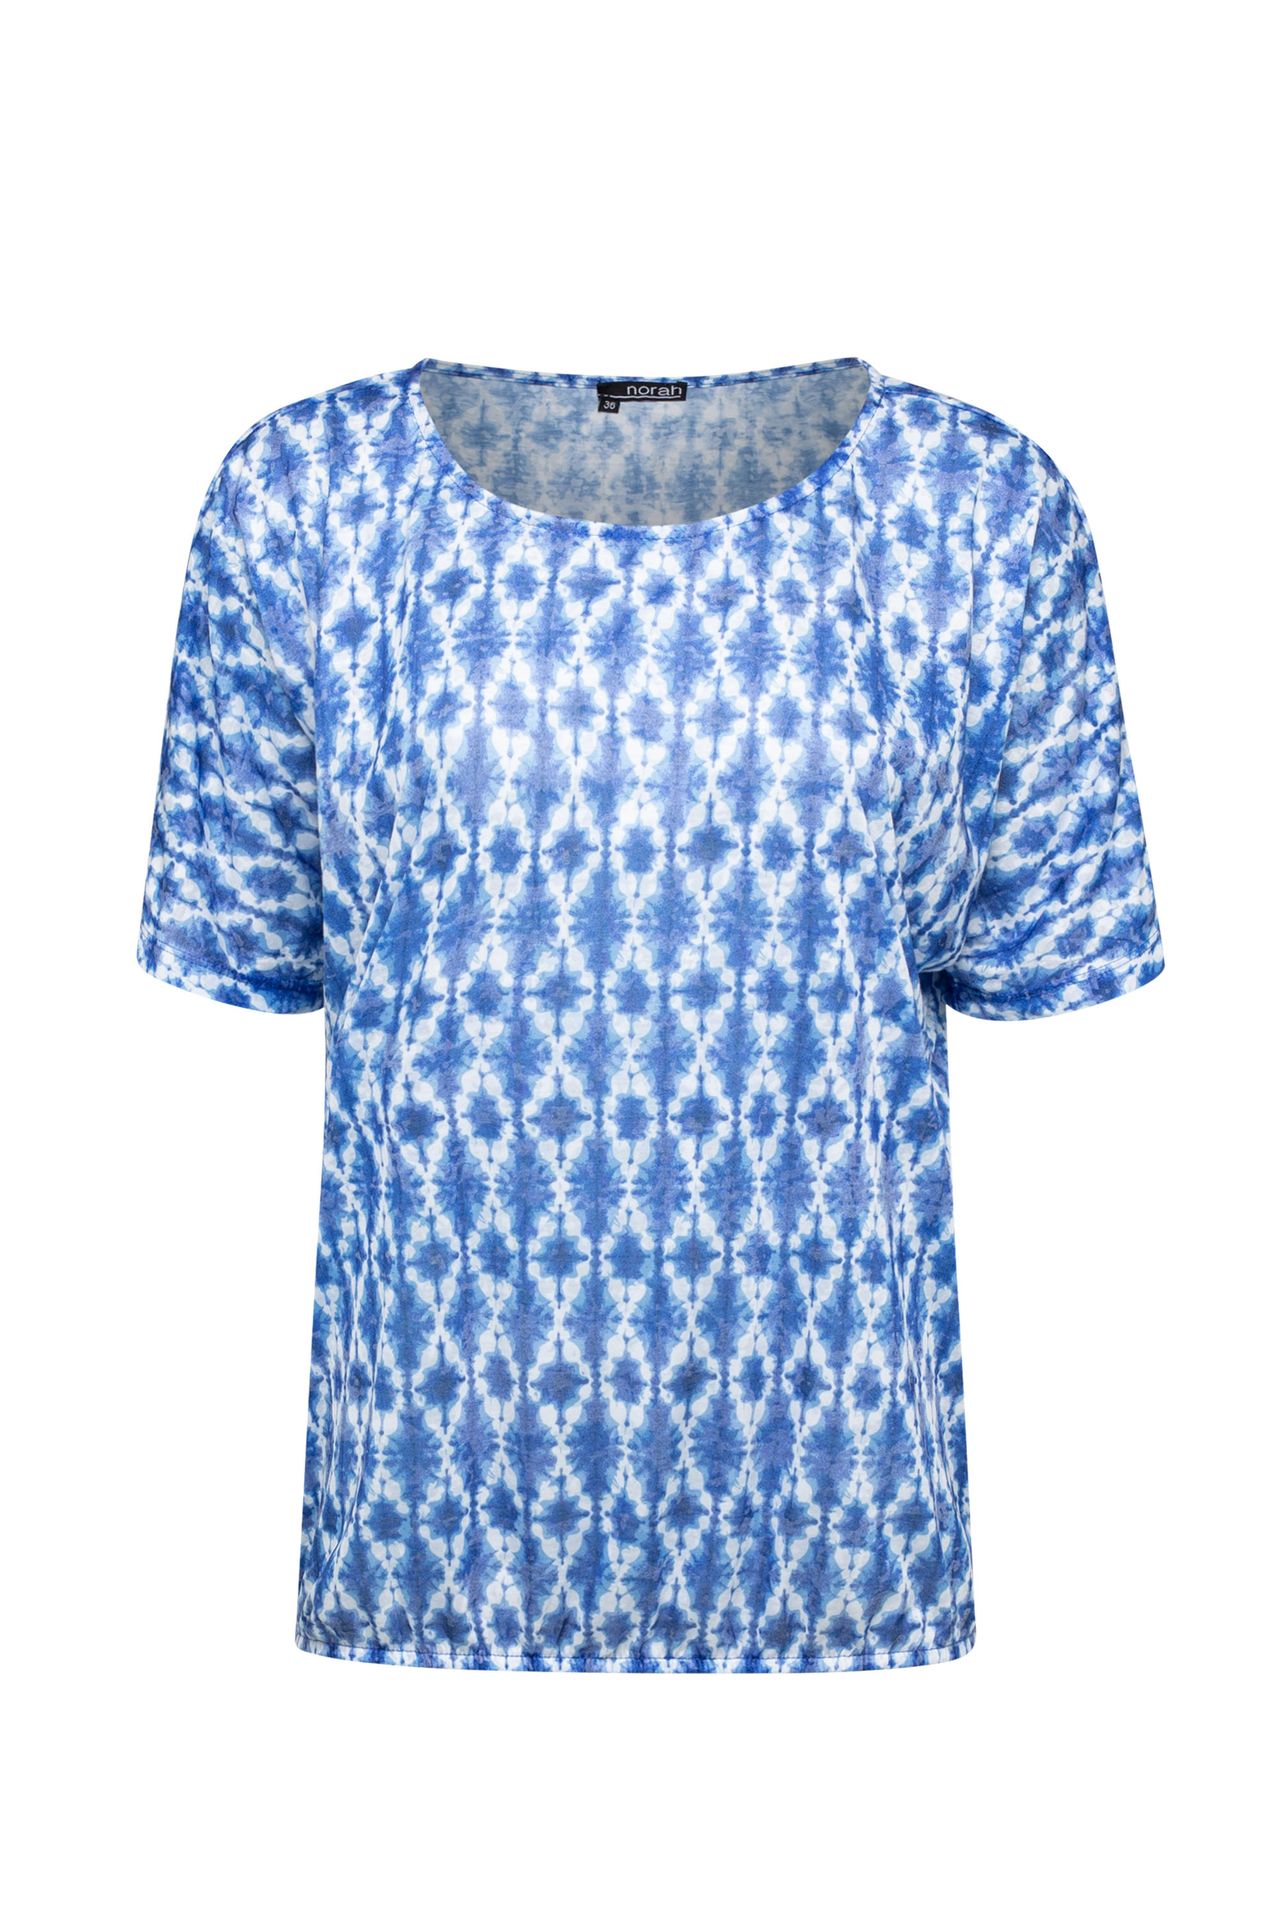 Norah Shirt blauw wit blue/white 212887-431